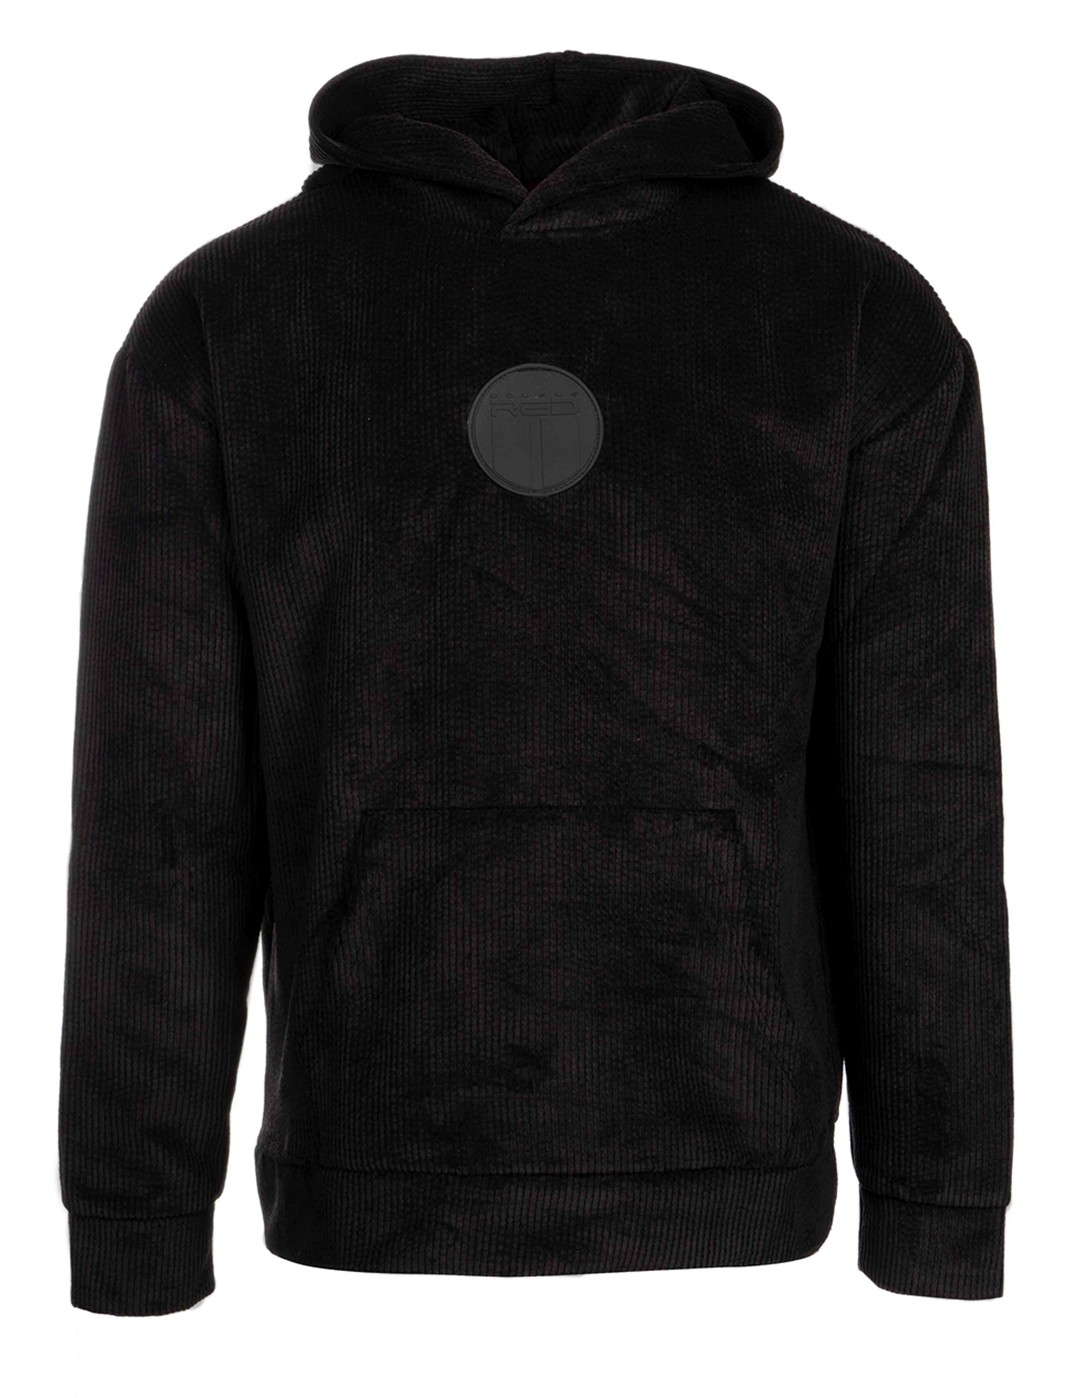 MANCHESTER Sweatshirt Black